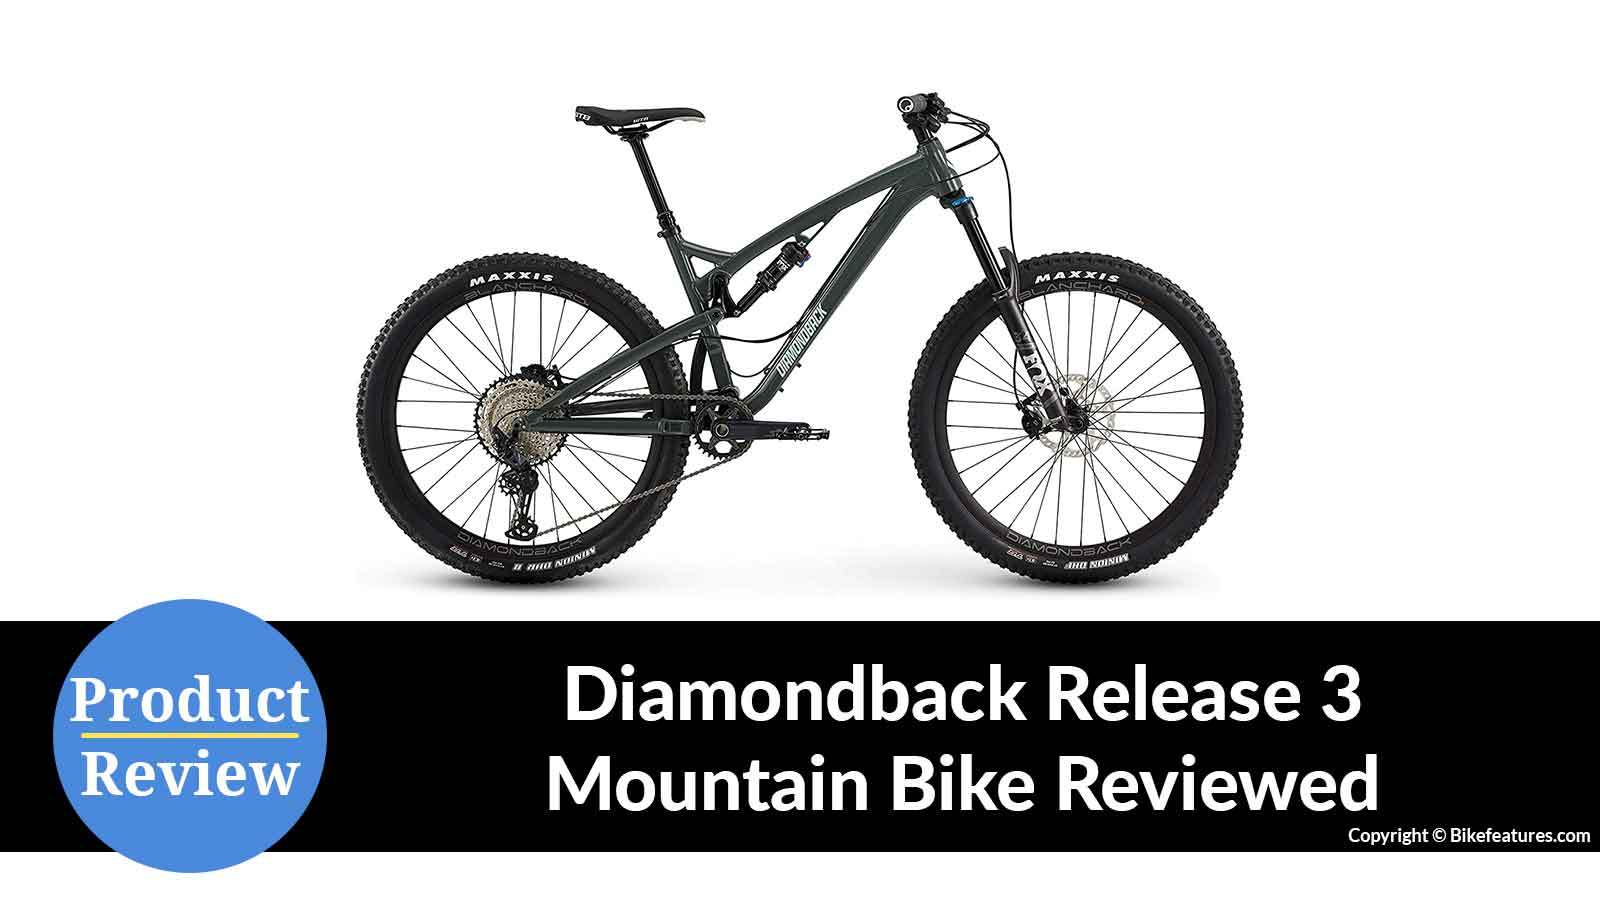 diamondback bike size chart